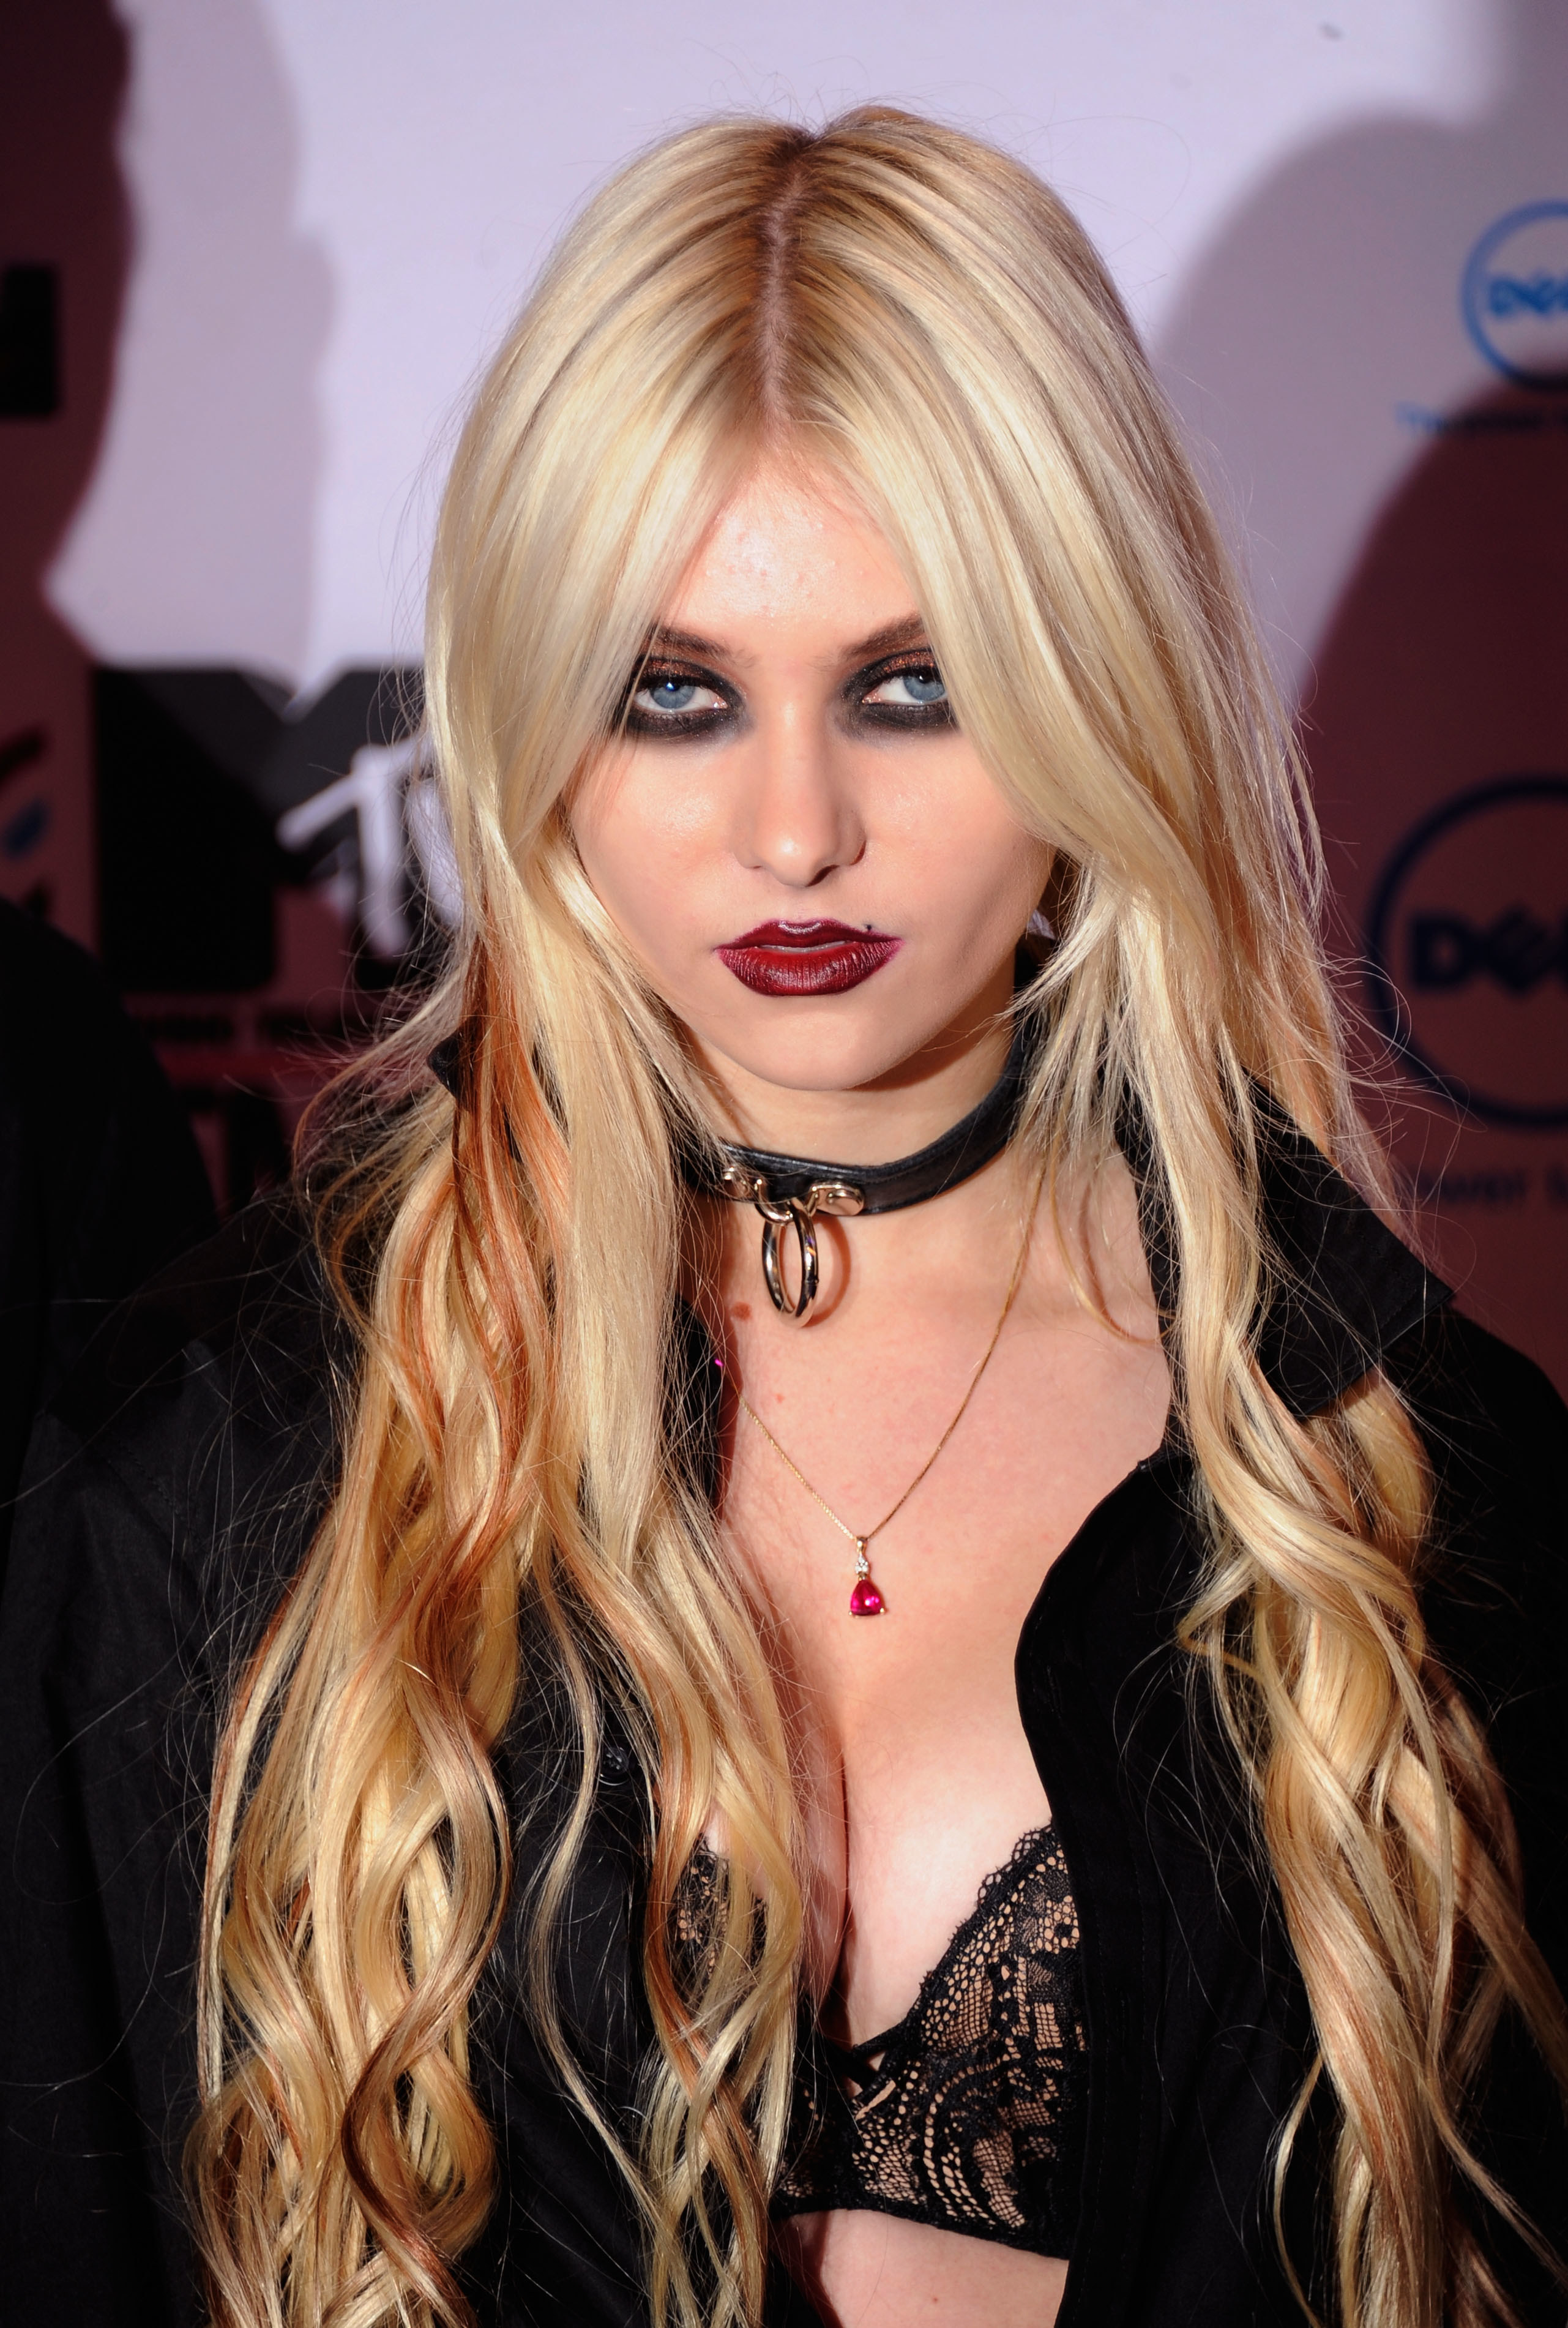 Taylor Momsen in heavy goth makeup